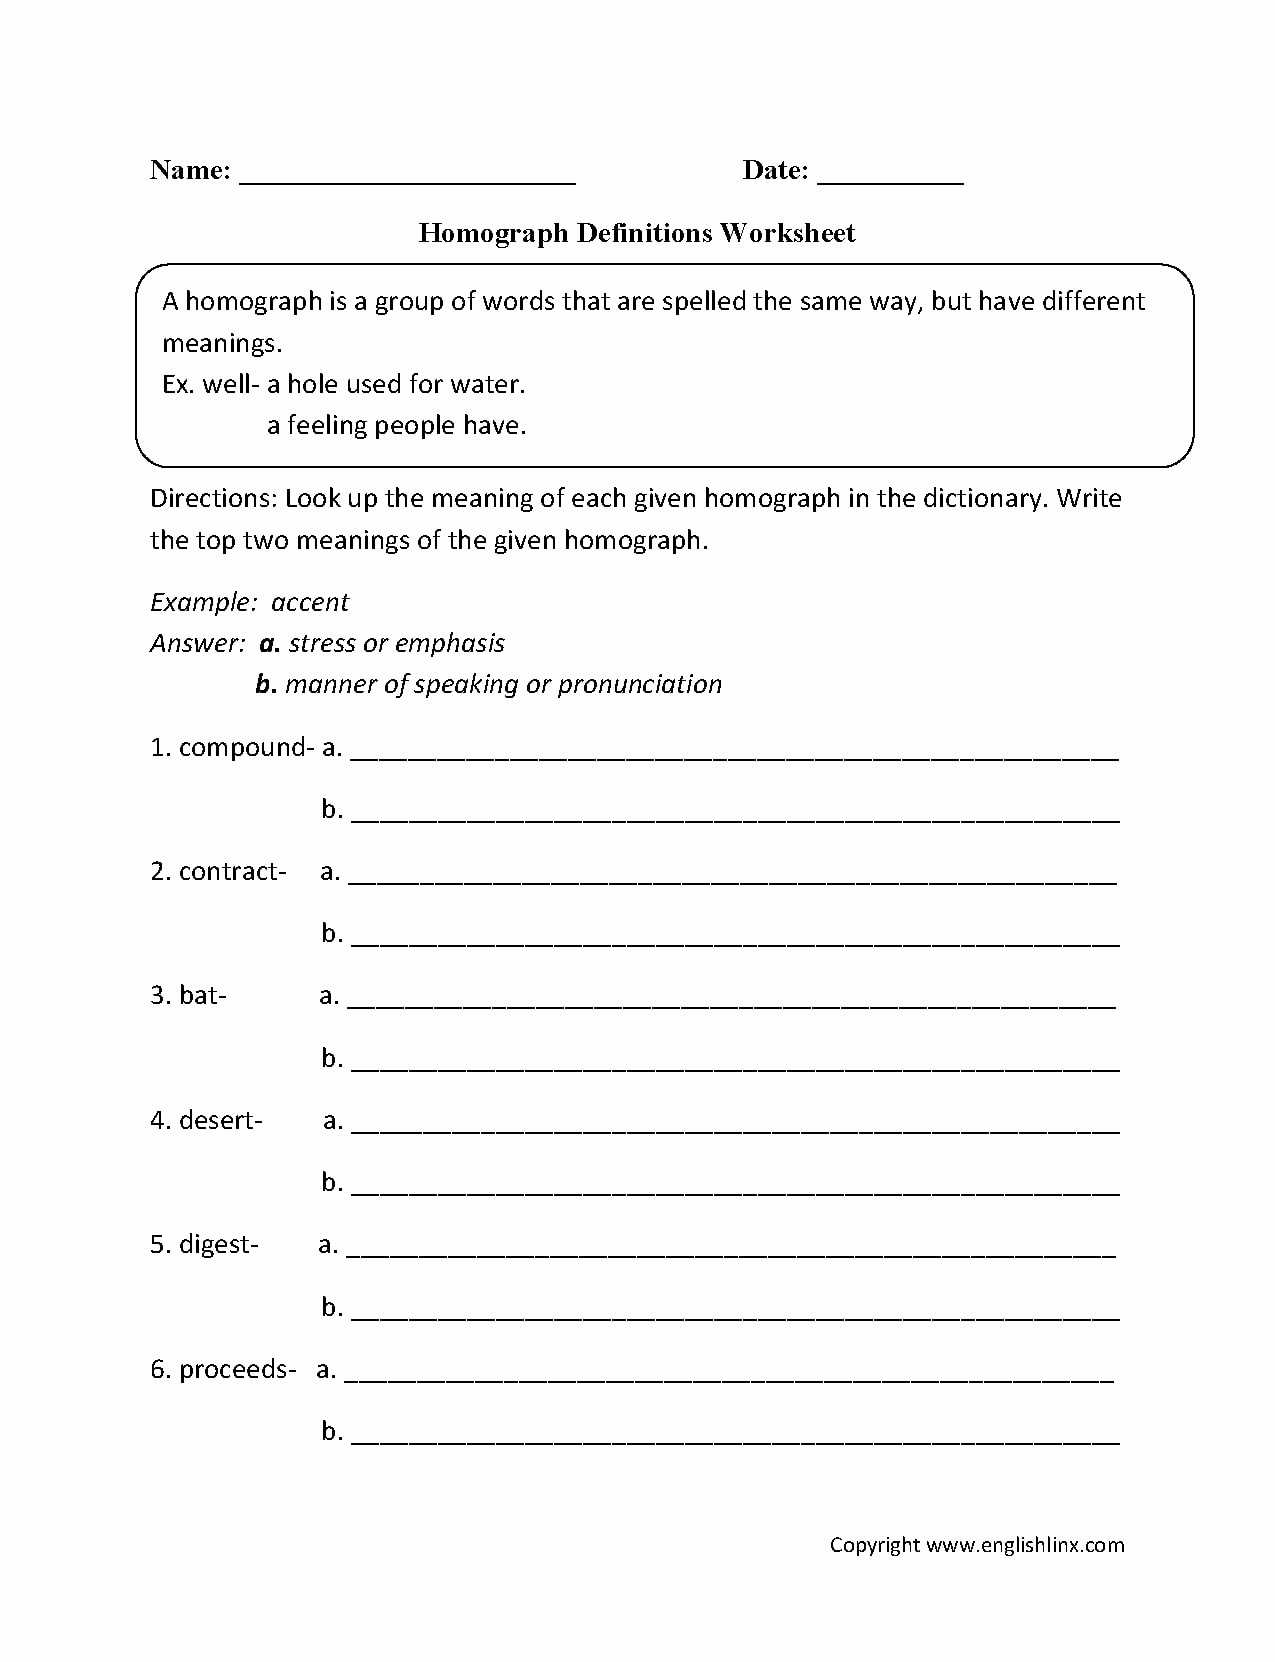 Homograph Worksheets 5th Grade Fresh 20 Homograph Worksheet 5th Grade